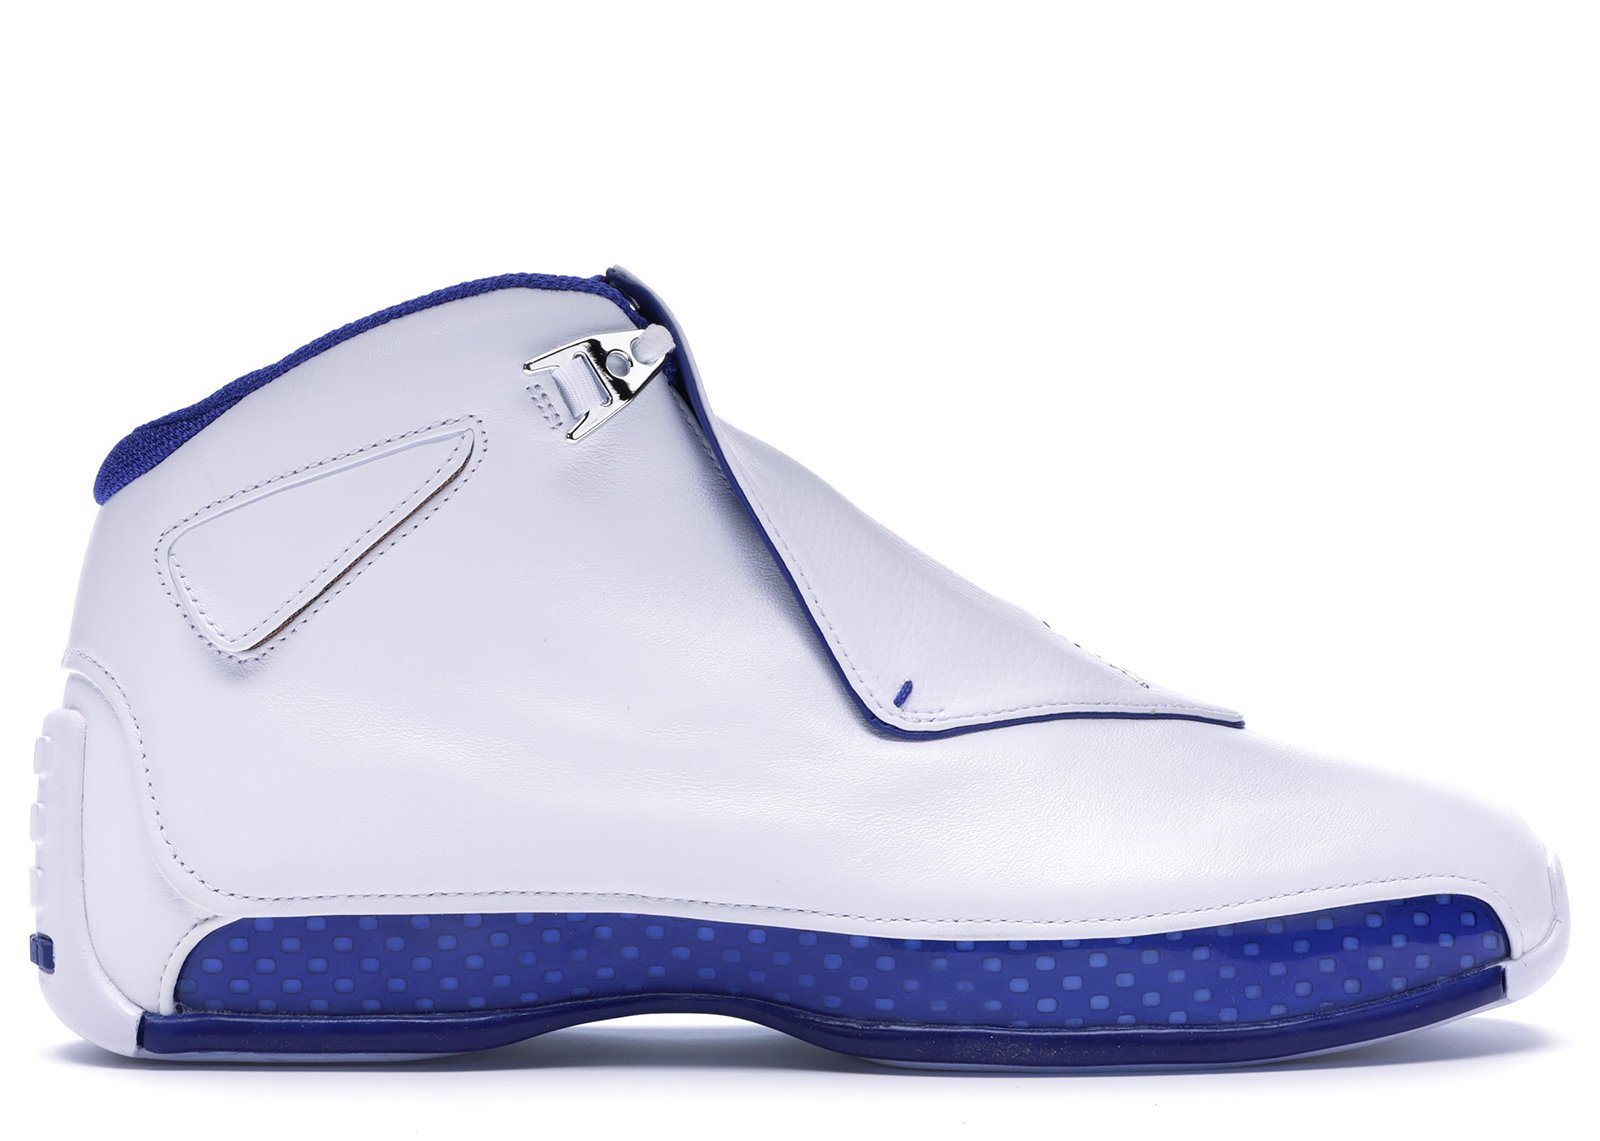 Jordan 18 Retro White Sport Royal sneakers